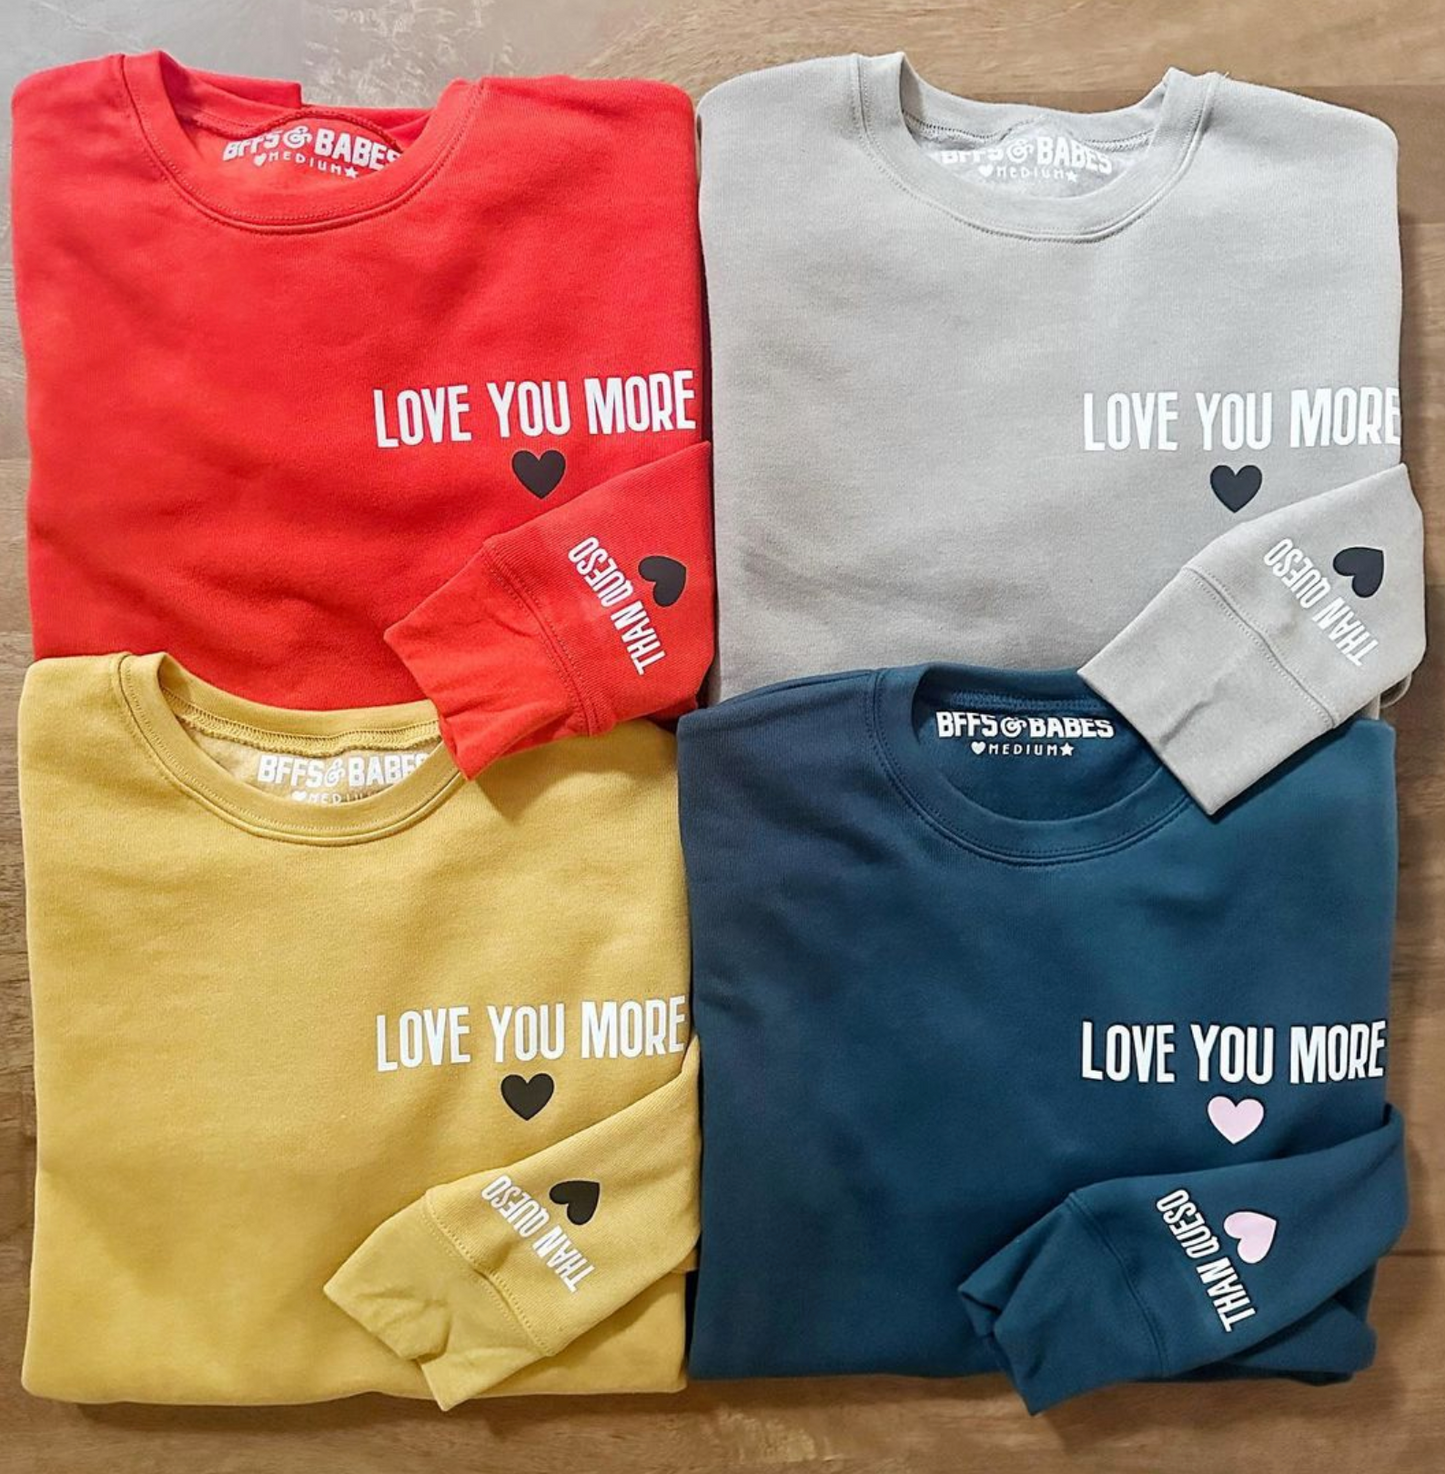 LOVE ON THE CUFF ♡ customizable dark ocean sweatshirt with personalized cuff